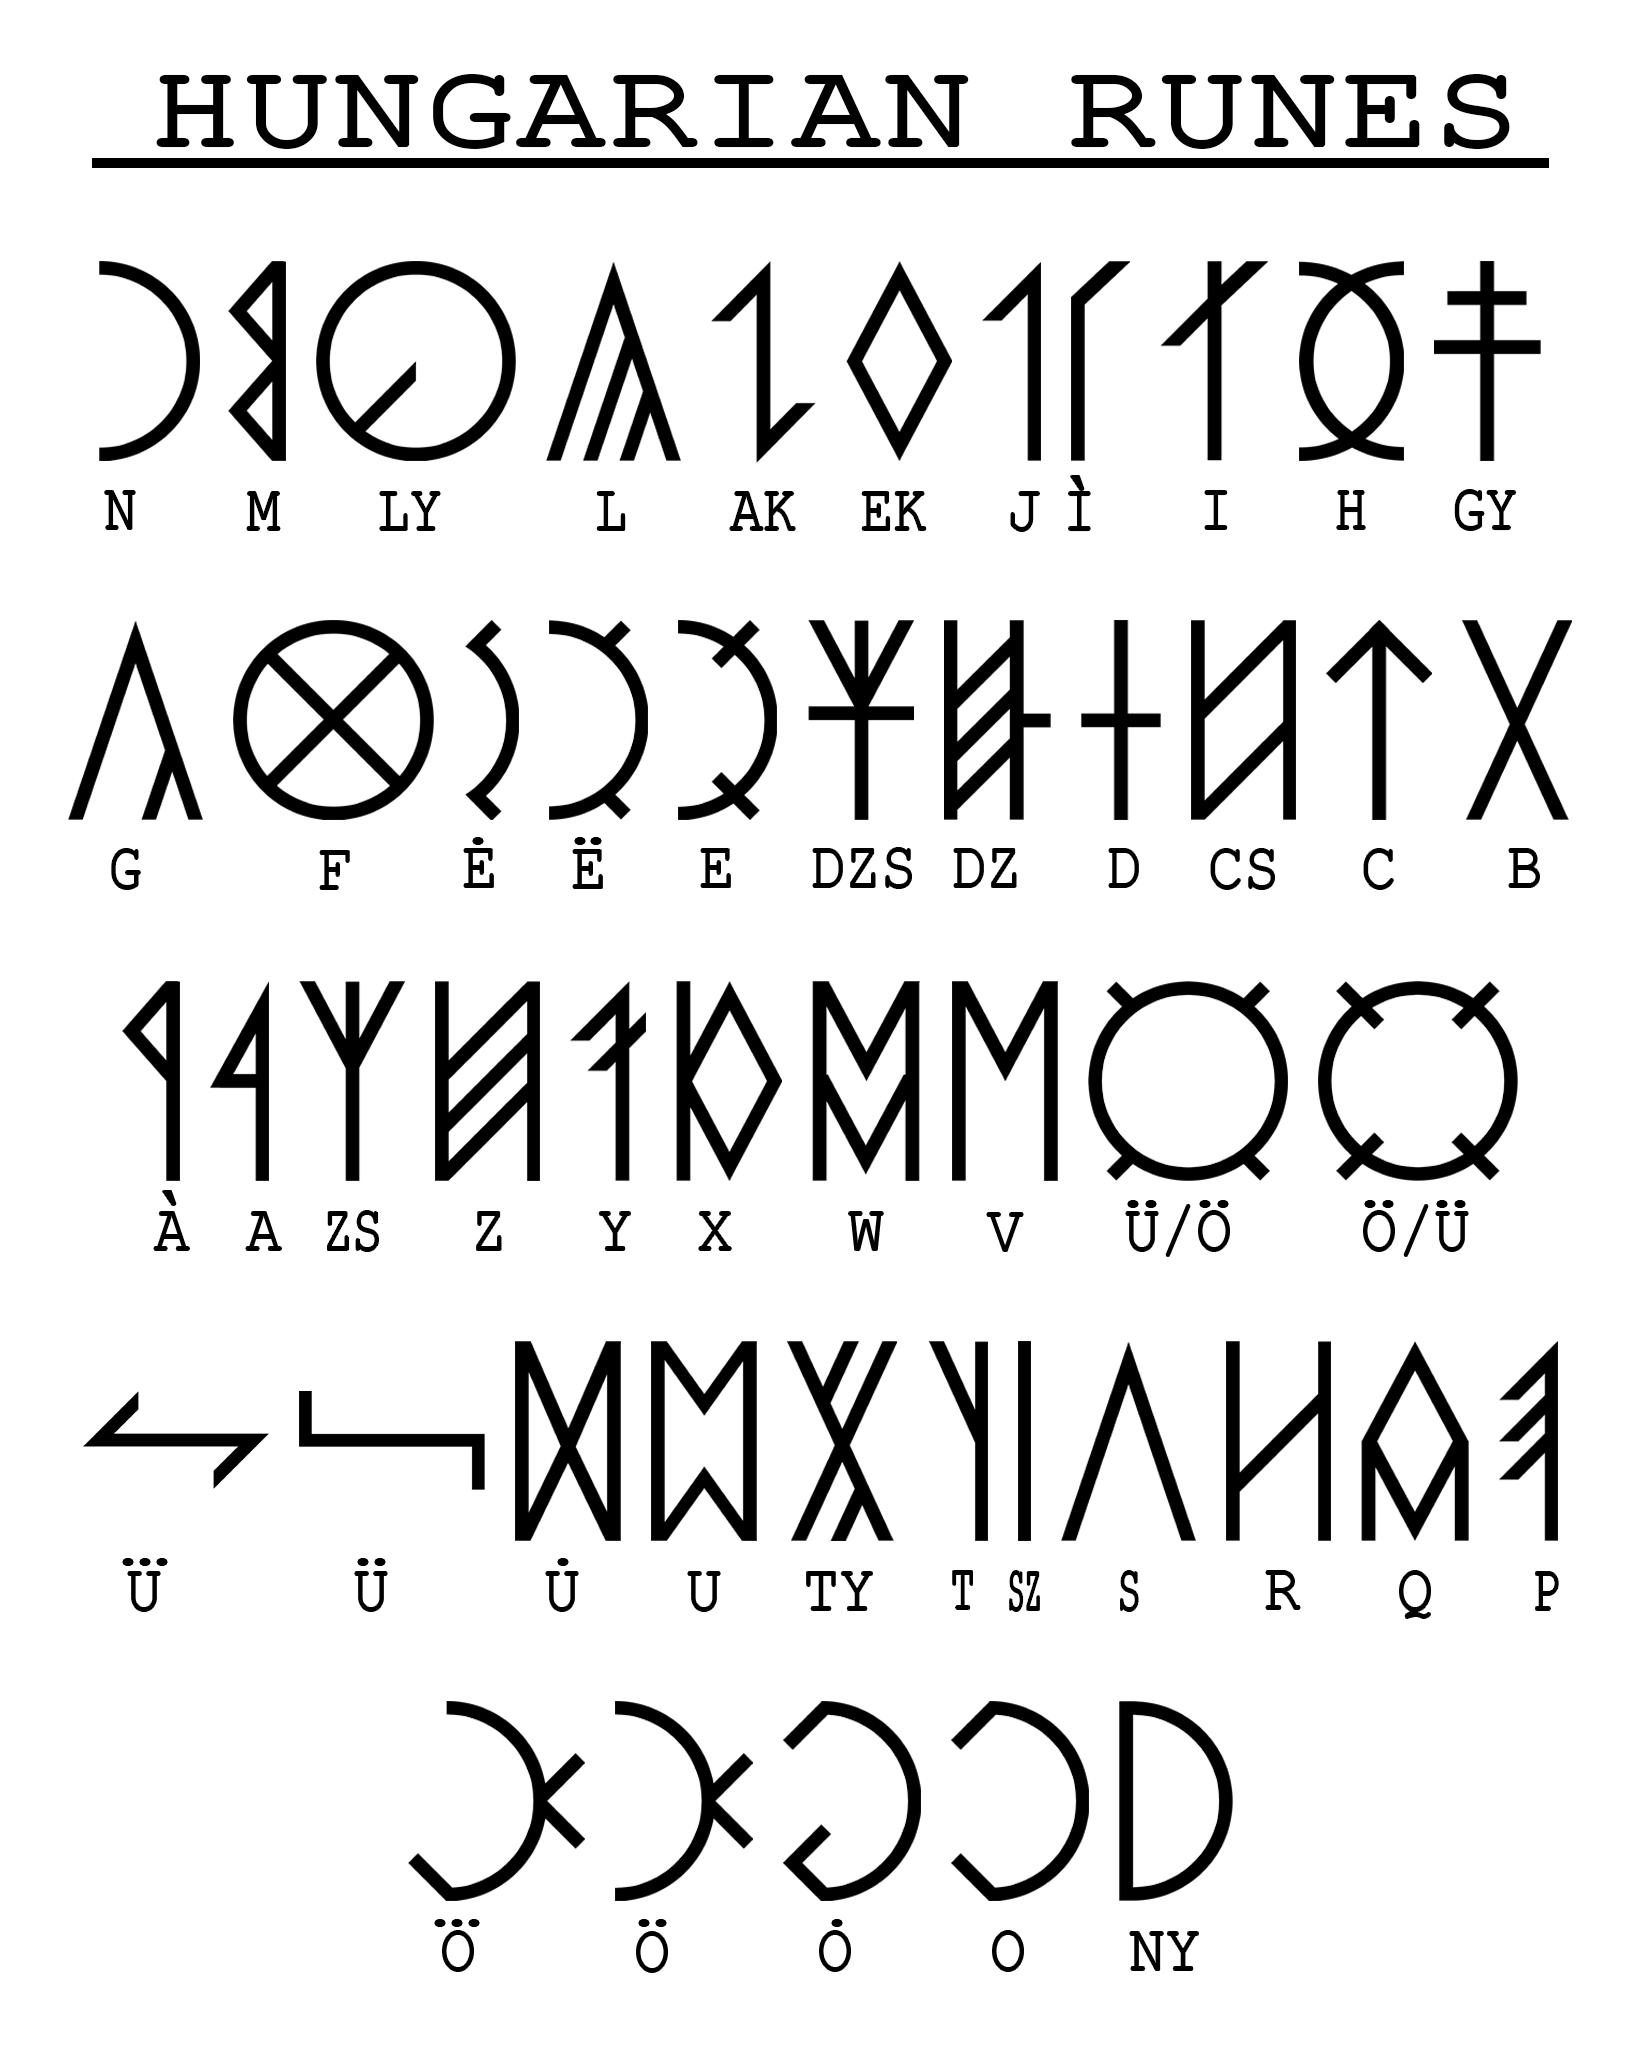 Alphabet Drawing (A-K)